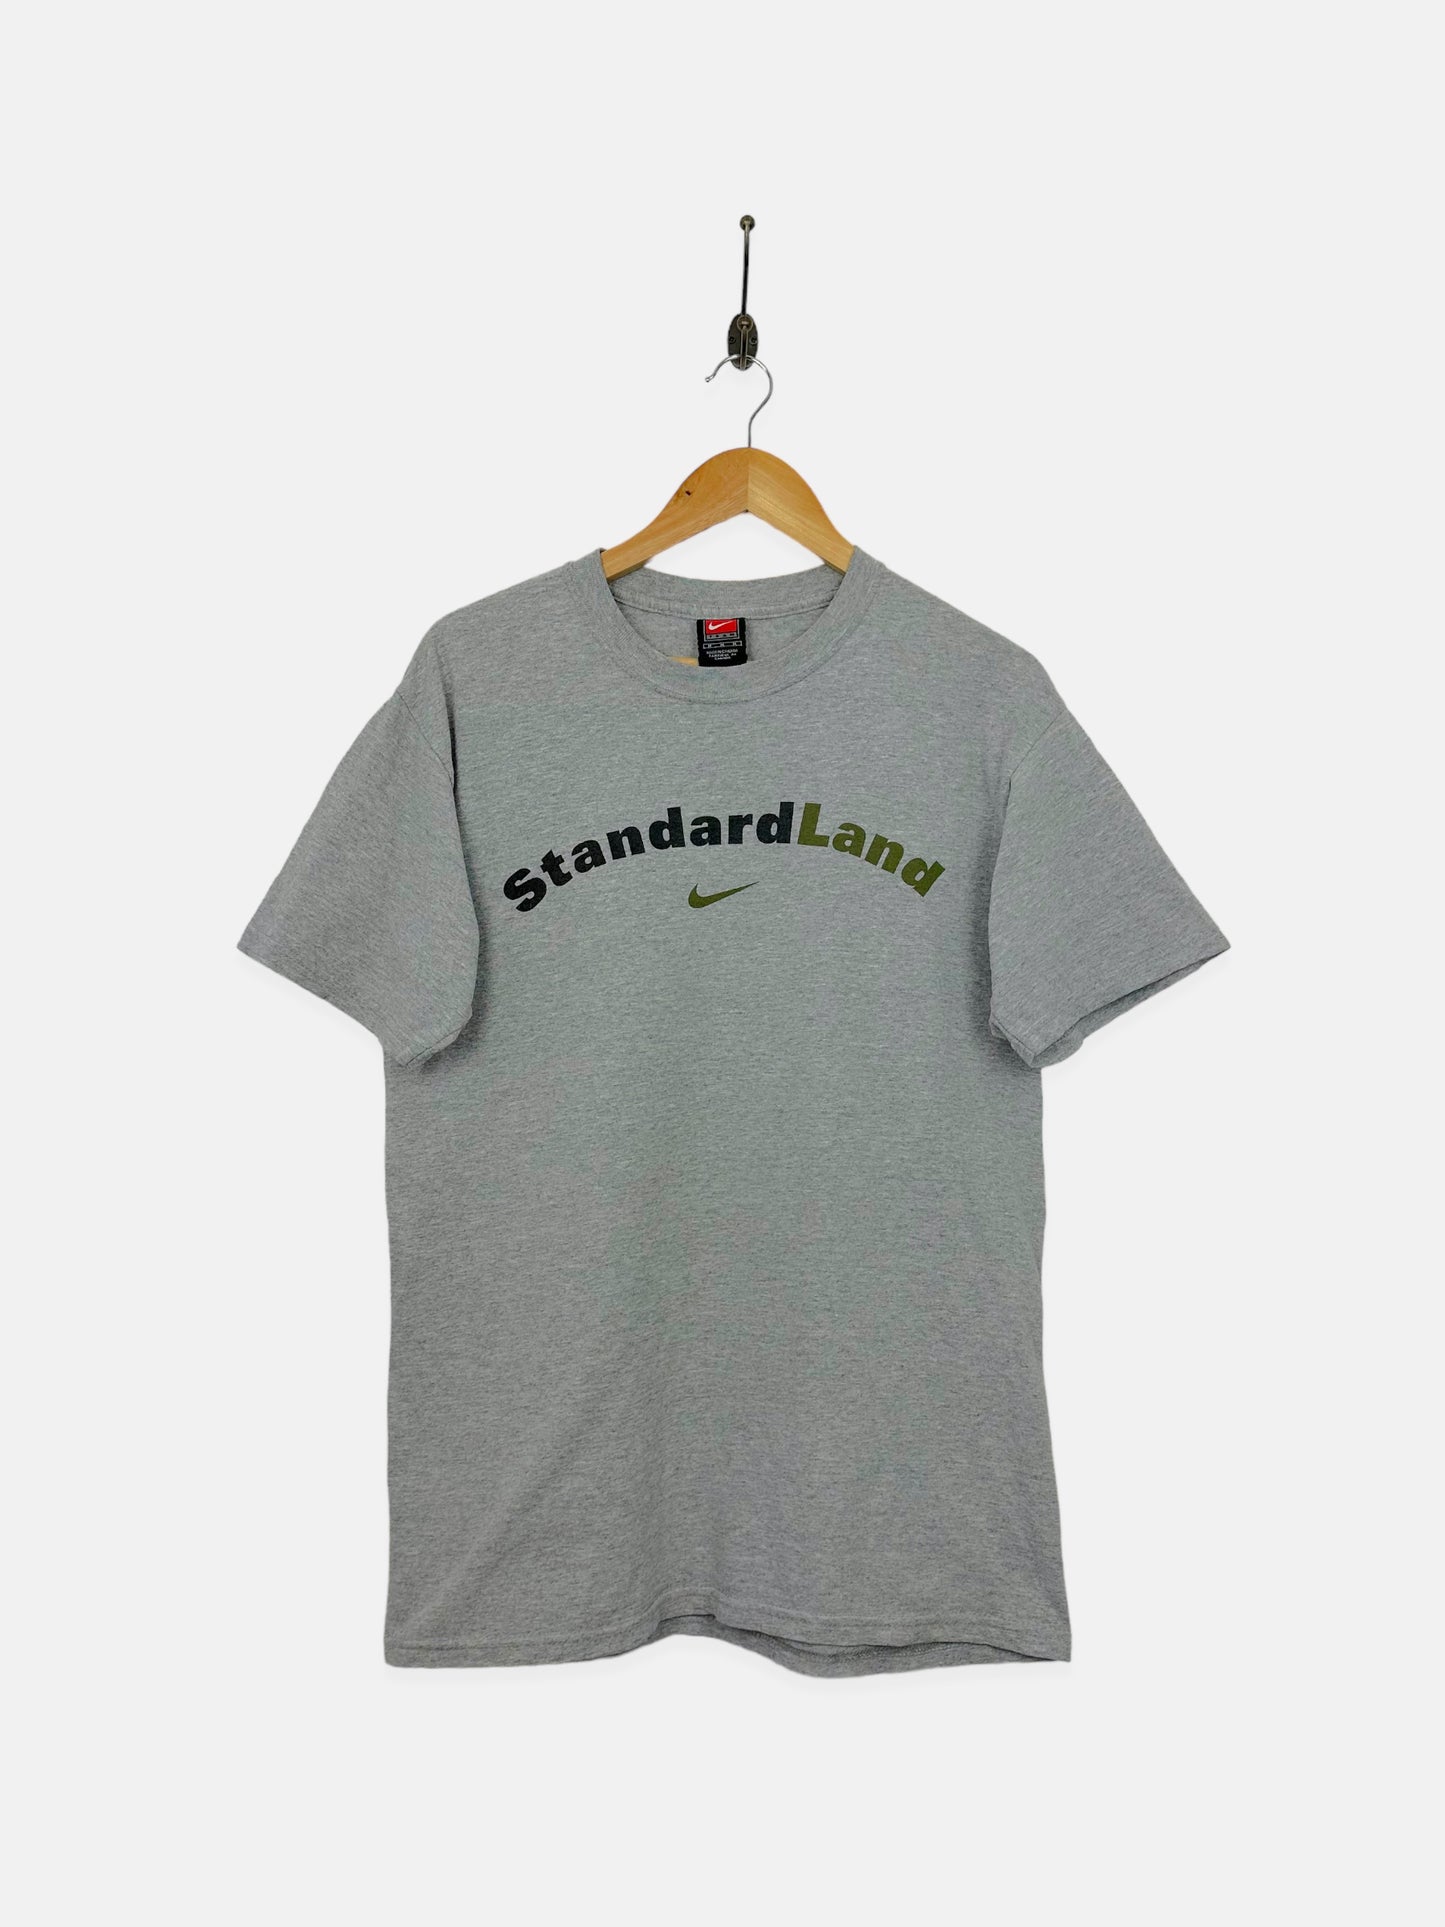 90's Nike Standardland Canada Made Vintage T-Shirt Size 12